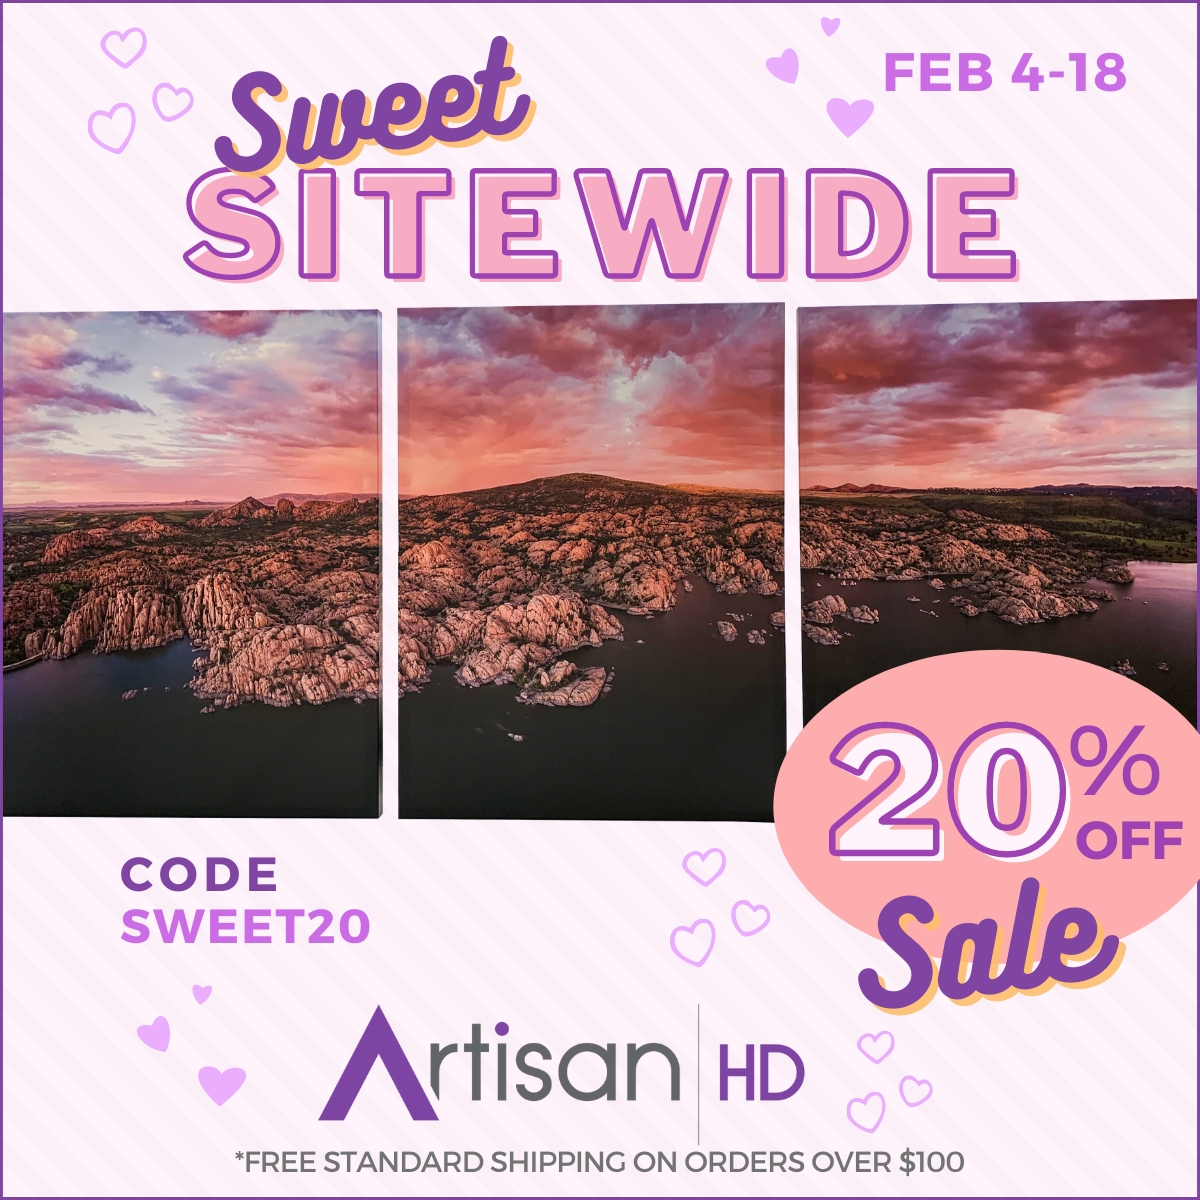 Sweet Sitewide Sale social post